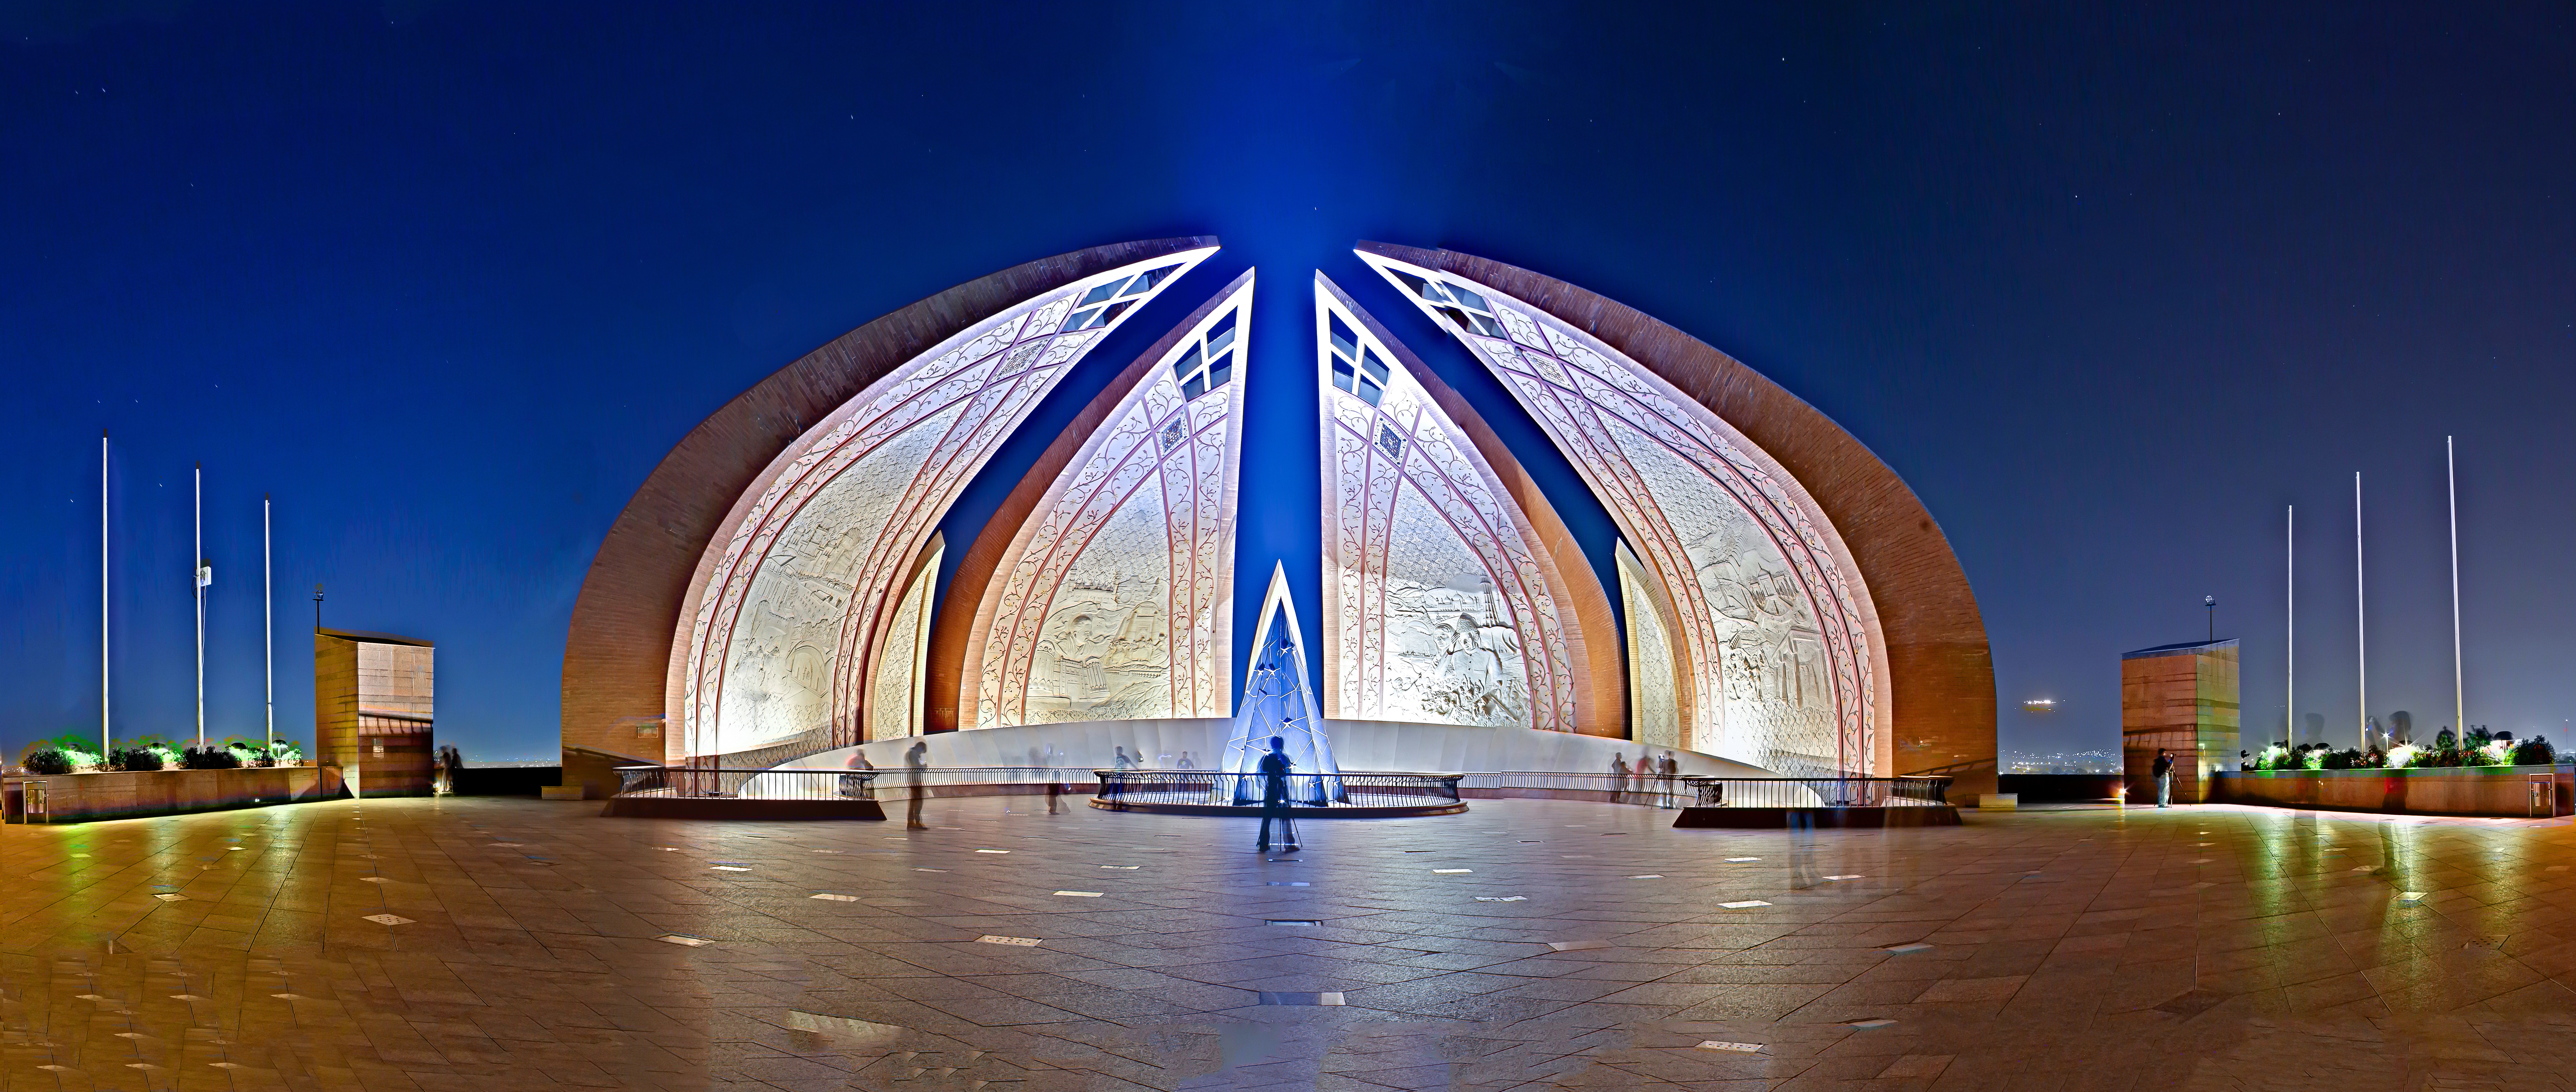 Amazing Pakistan Monument Pictures & Backgrounds